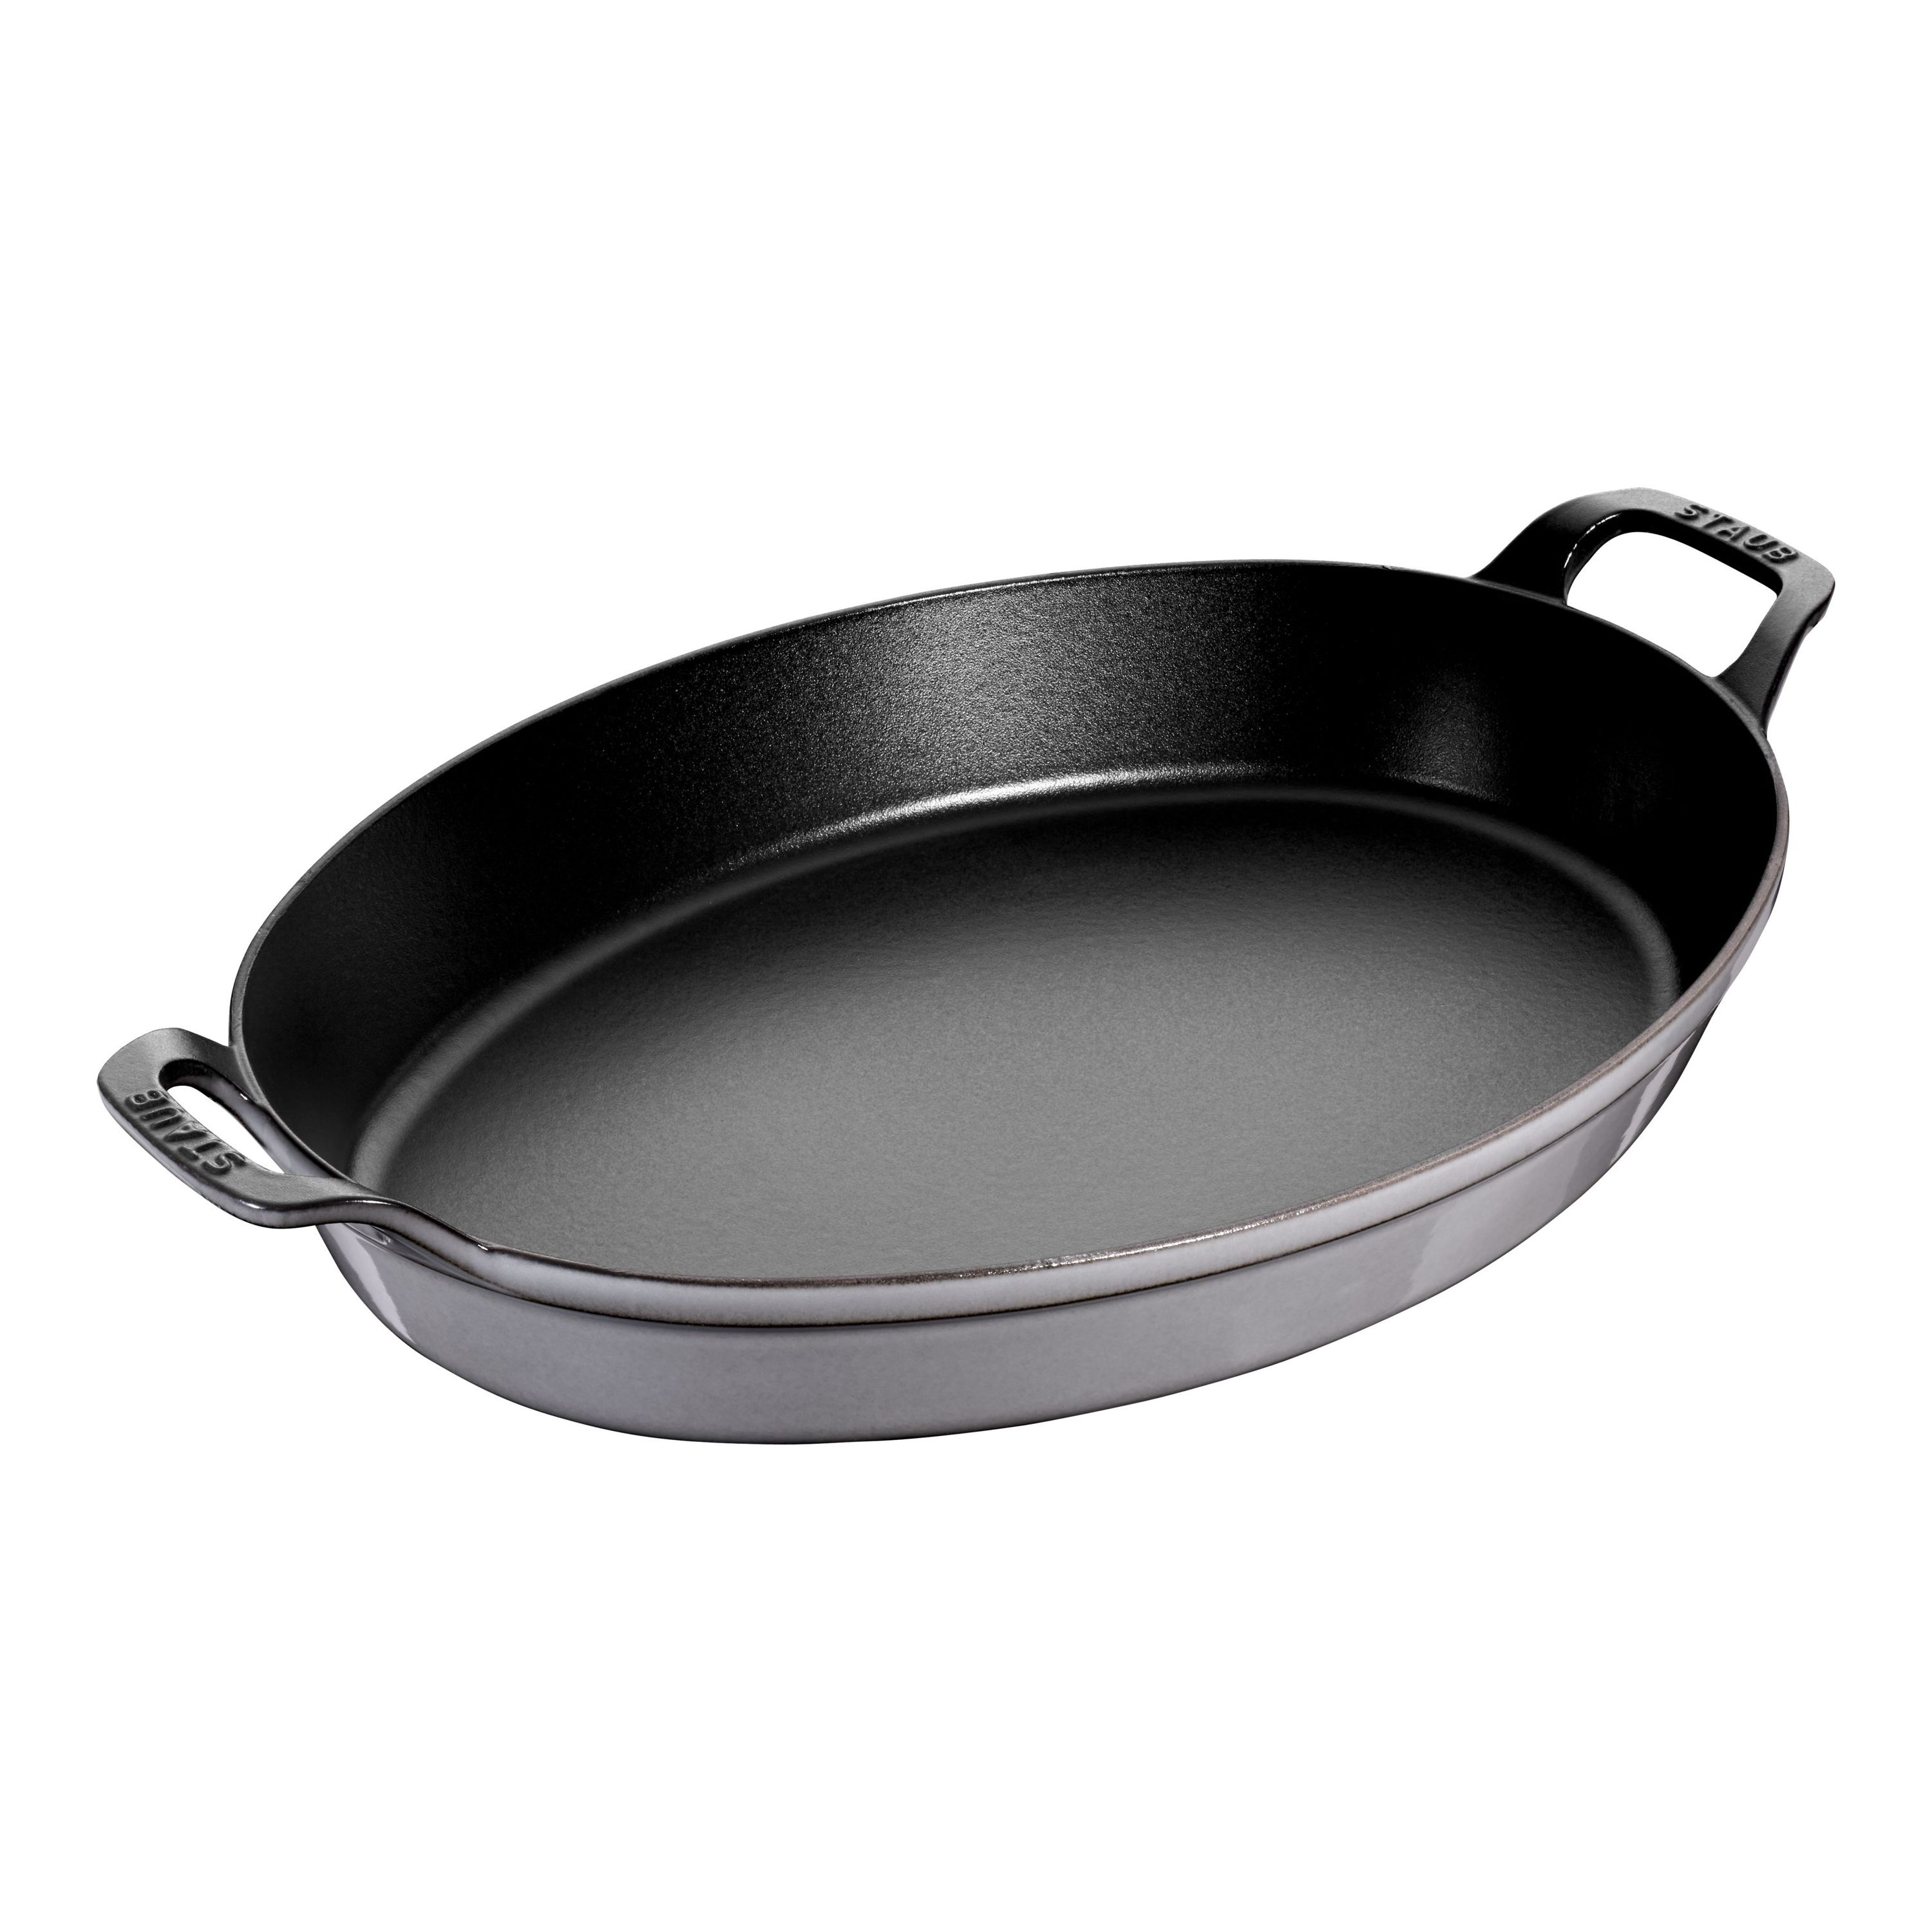 Staub Cast Iron Oval Roasting Pans & Casserole Dishes, 2 Sizes, Enameled on  Food52